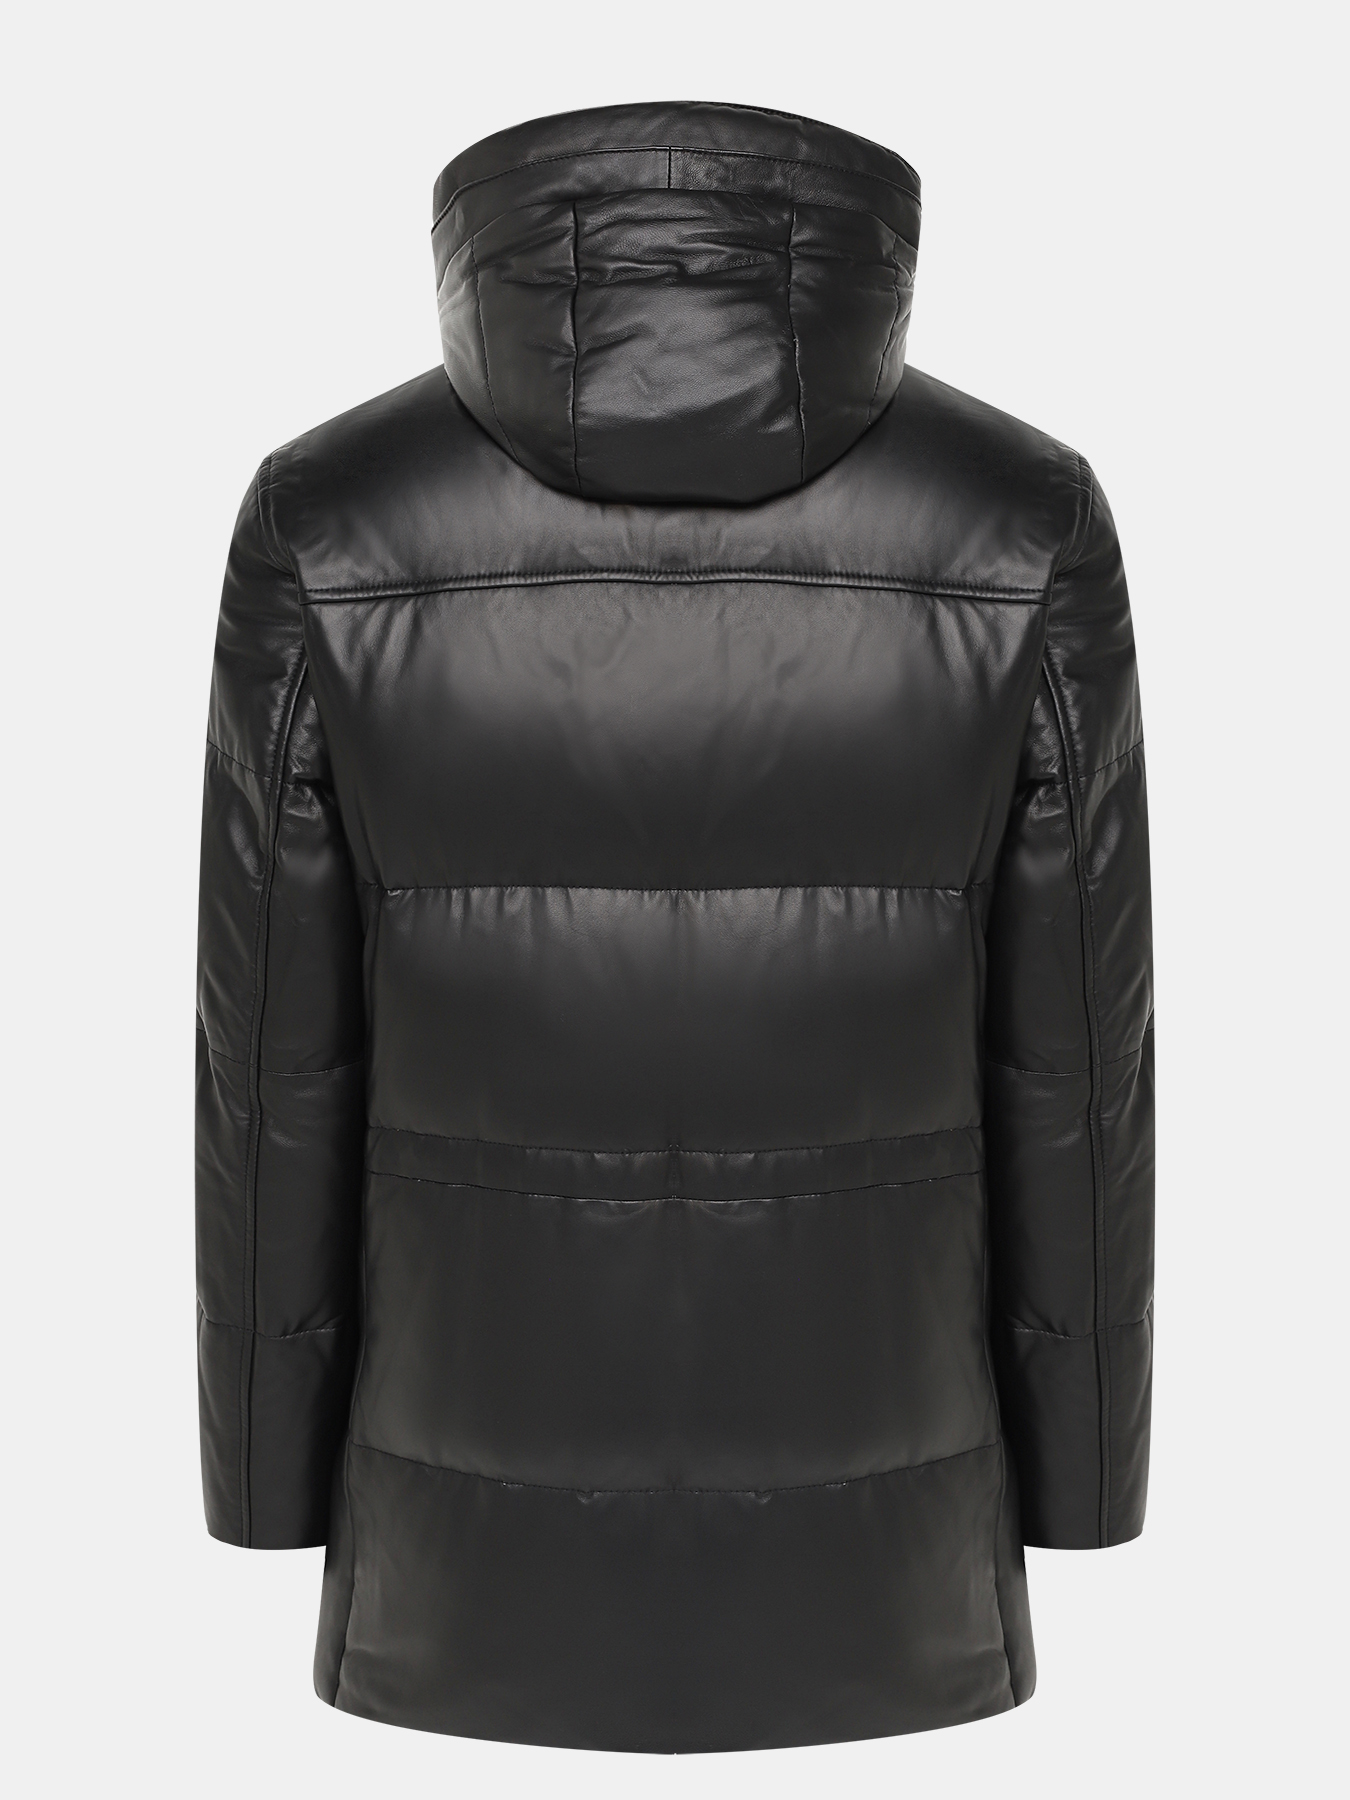 Кожаная куртка Ritter 390990-031, цвет черный, размер 60 - фото 5